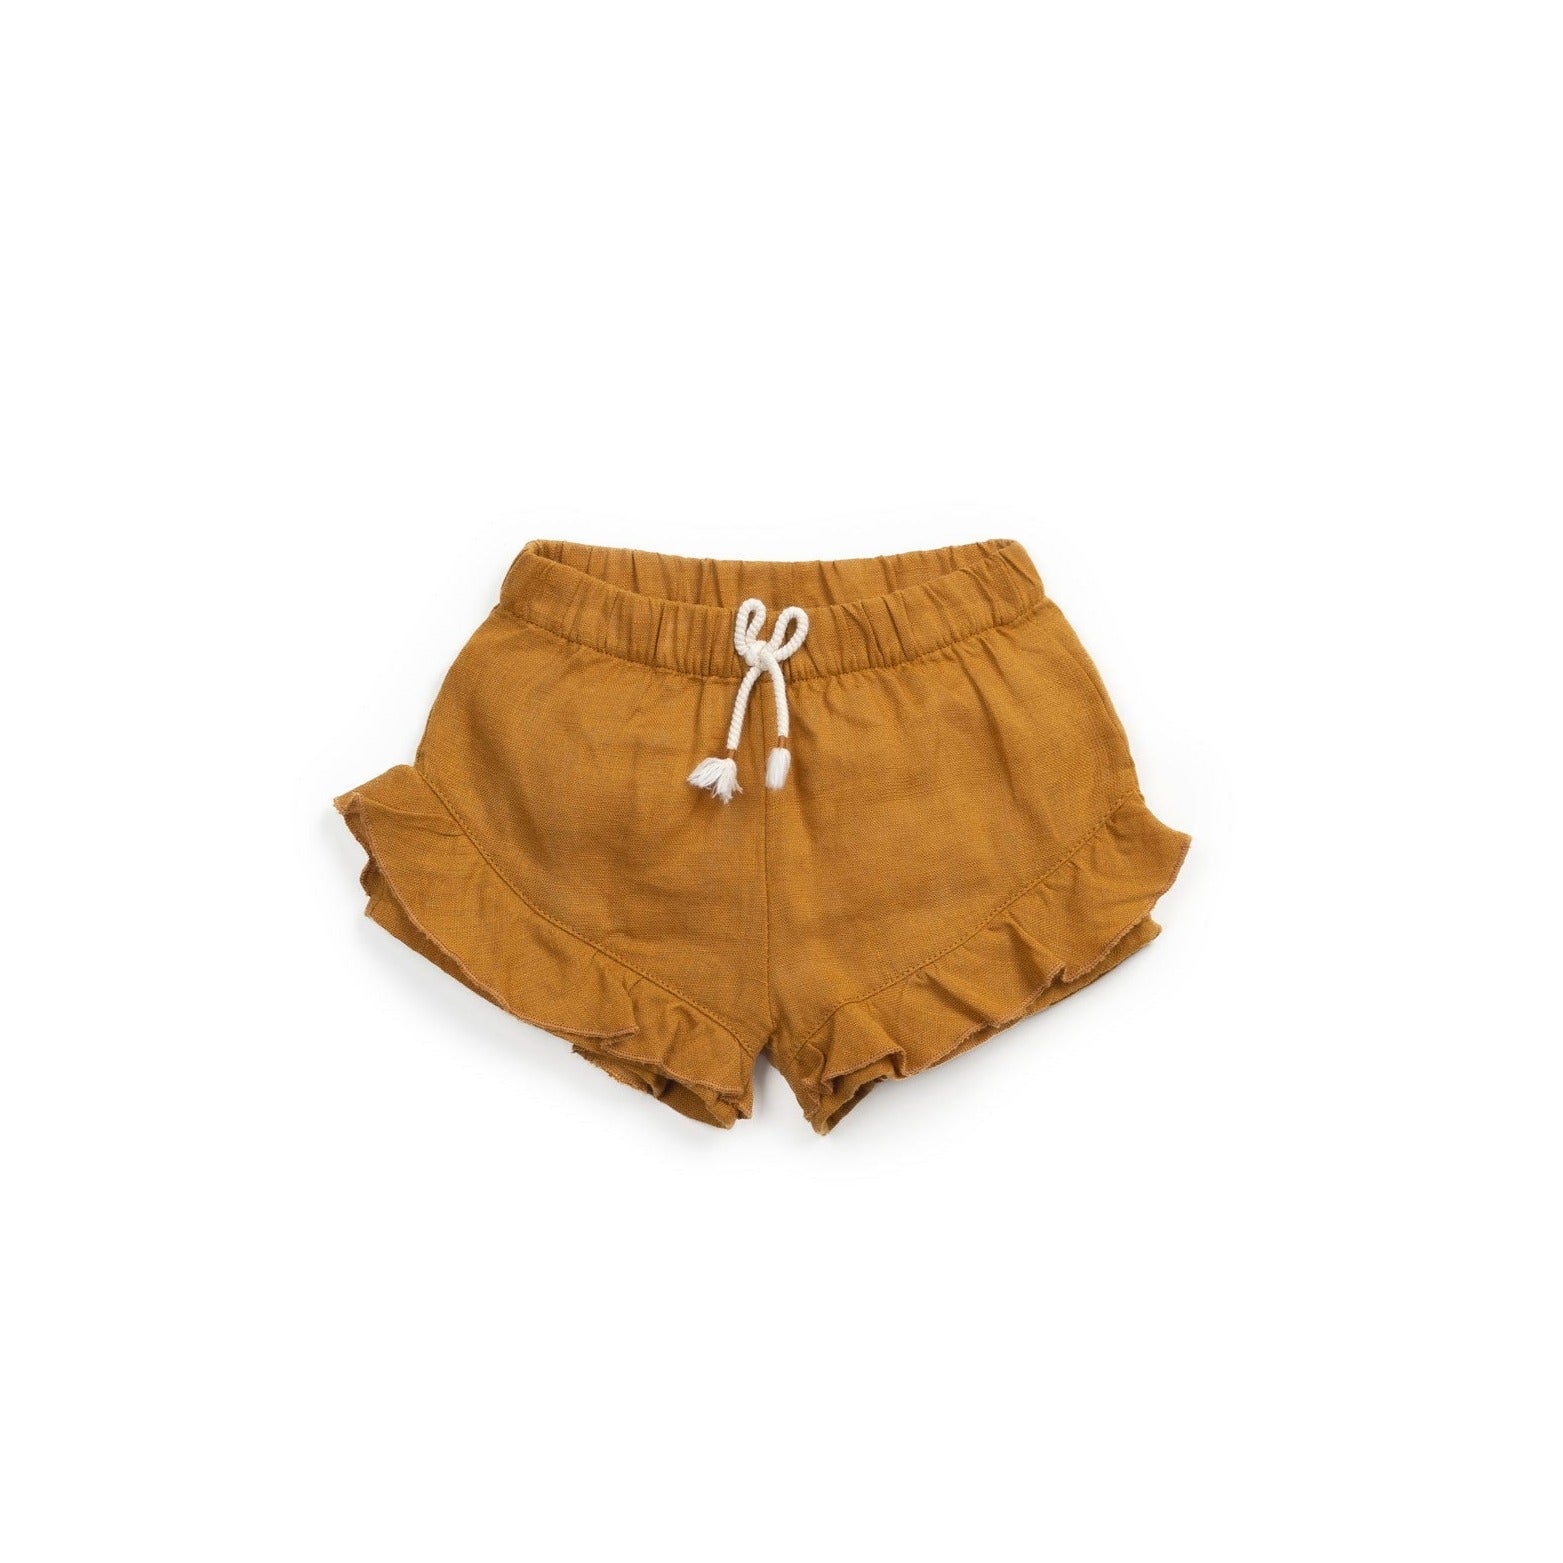 Linen shorts with crisp yellow elastic belt - Play Up